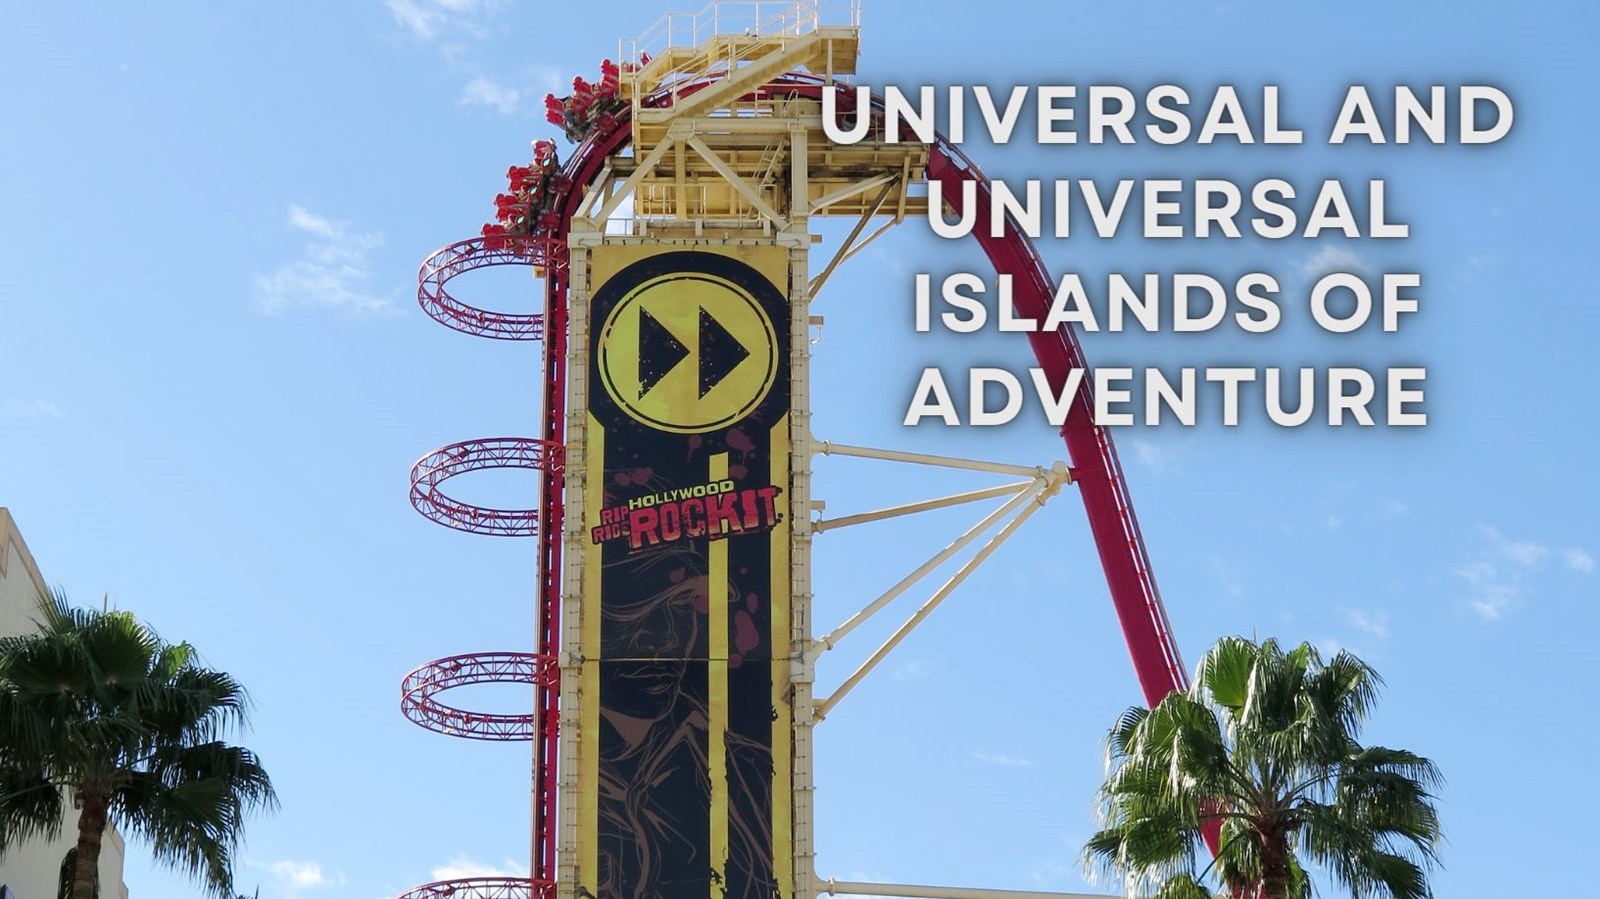 Spotlight - Universal and Universal Islands of Adventure